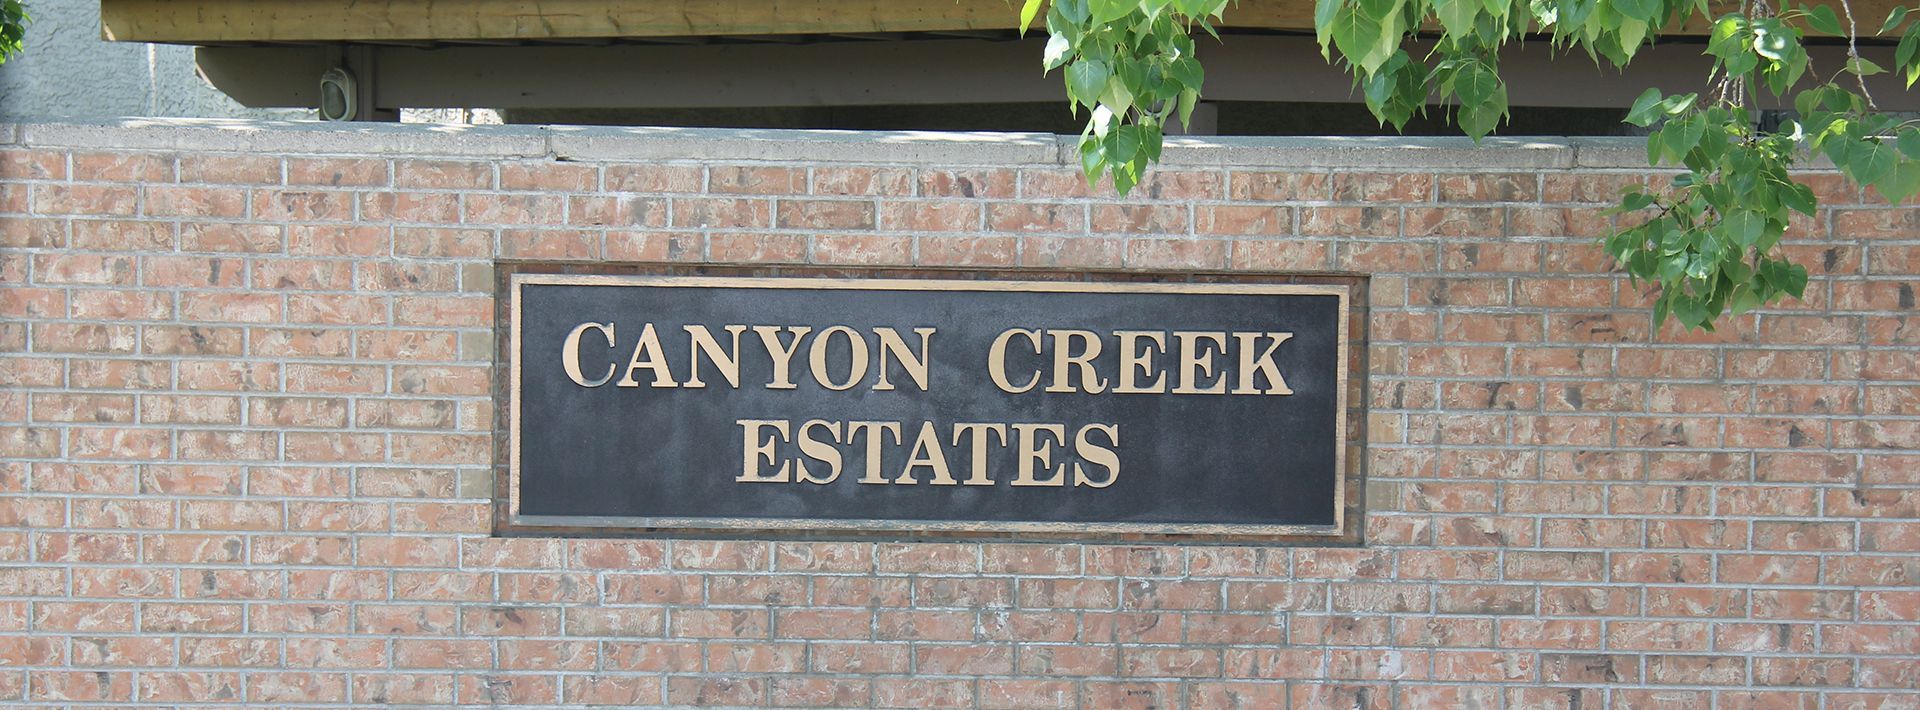 A Canyon creek estates sign on a brick wall